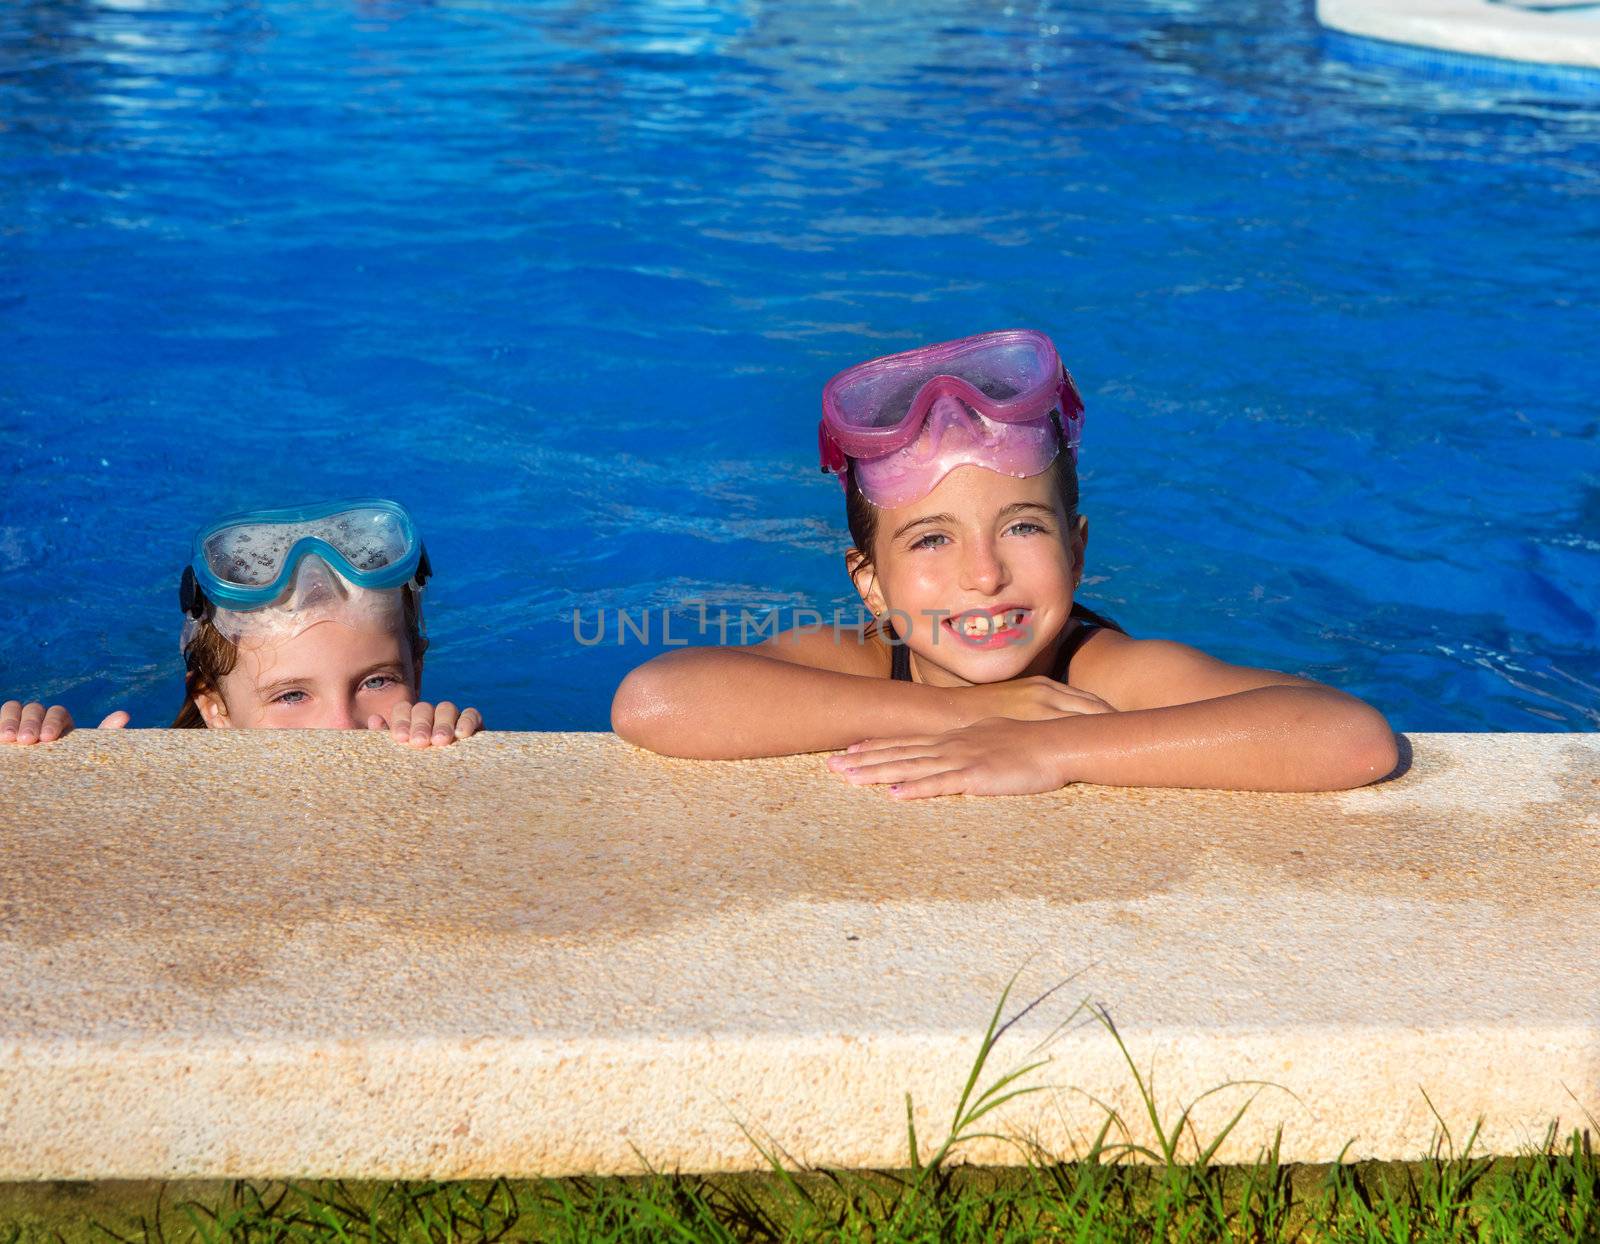 Blue eyes children girls on on blue pool poolside smiling by lunamarina